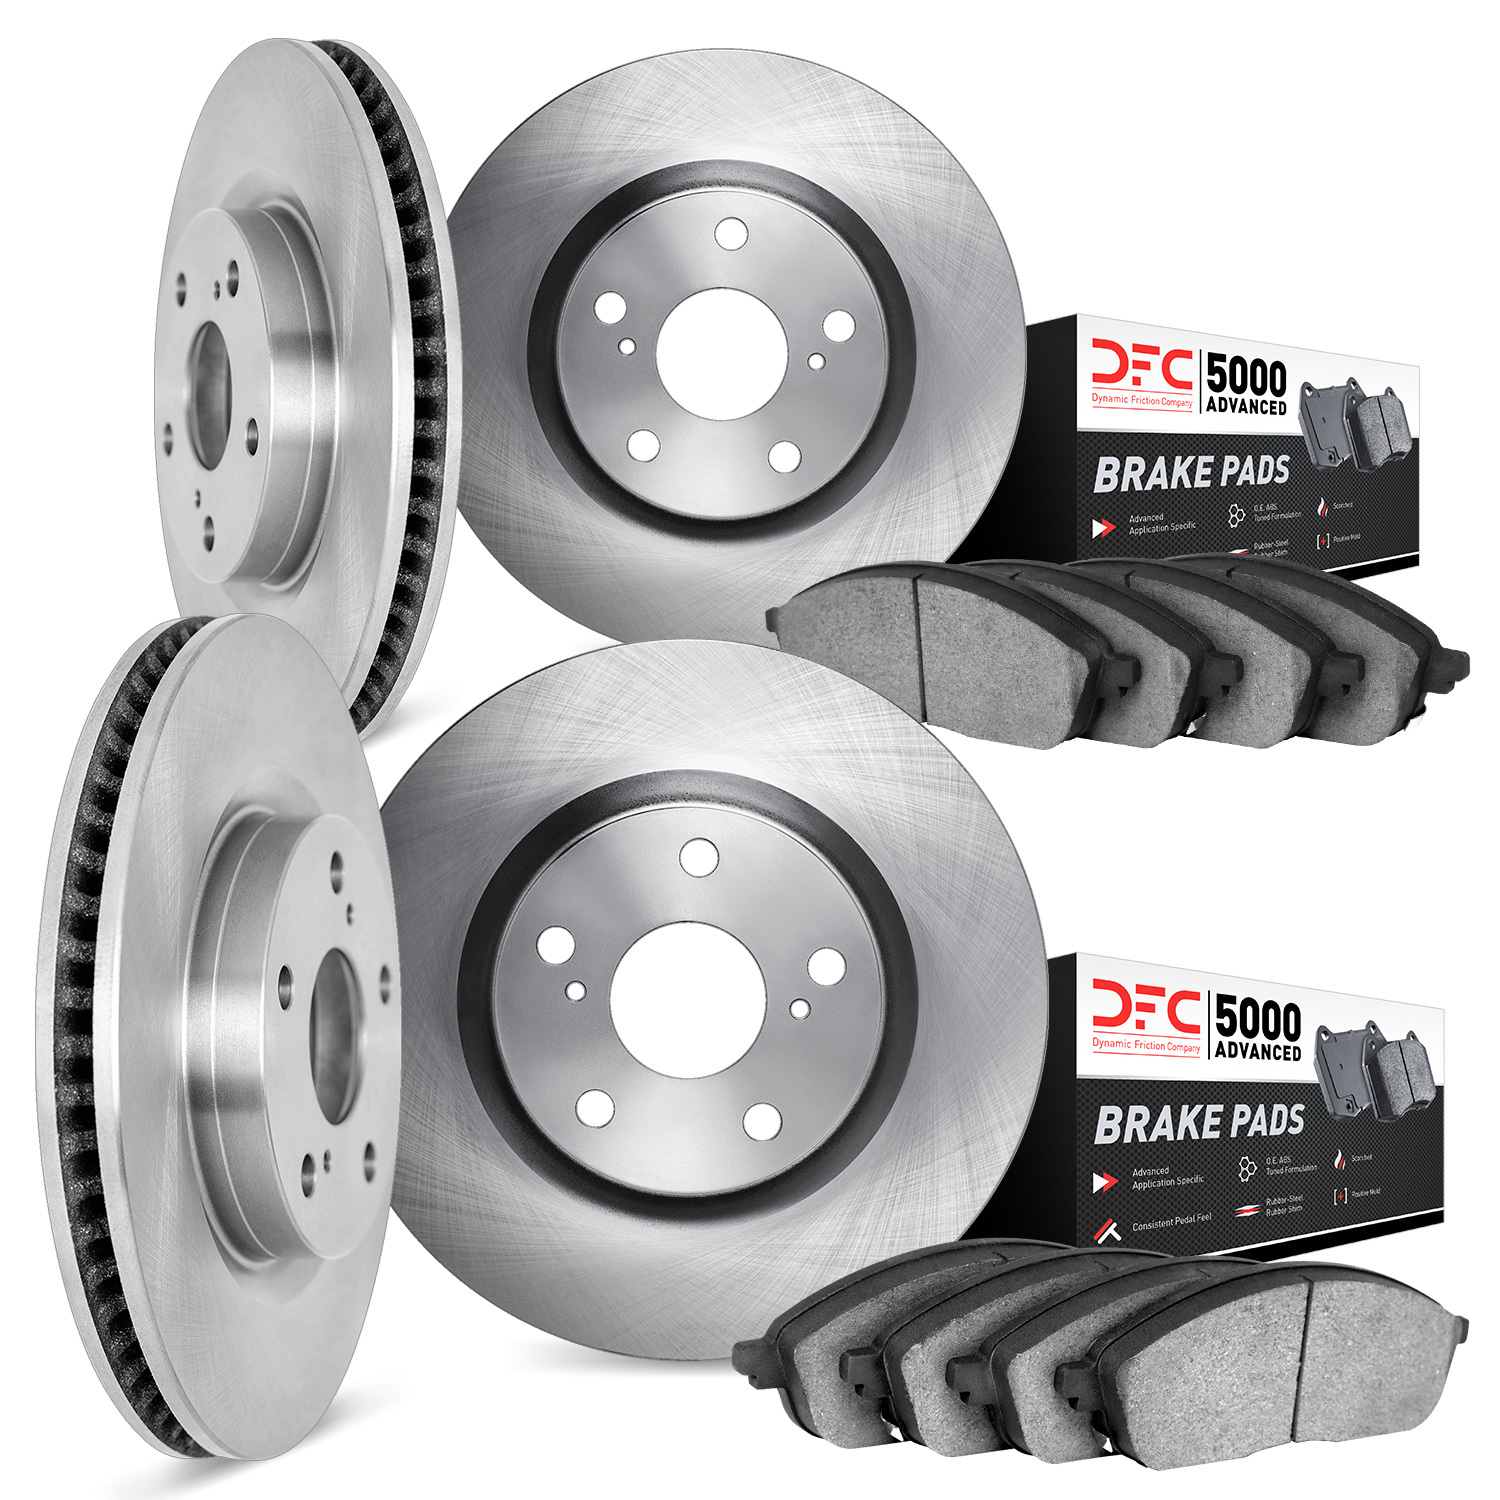 6504-13008 Brake Rotors w/5000 Advanced Brake Pads Kit, Fits Select Subaru, Position: Front and Rear